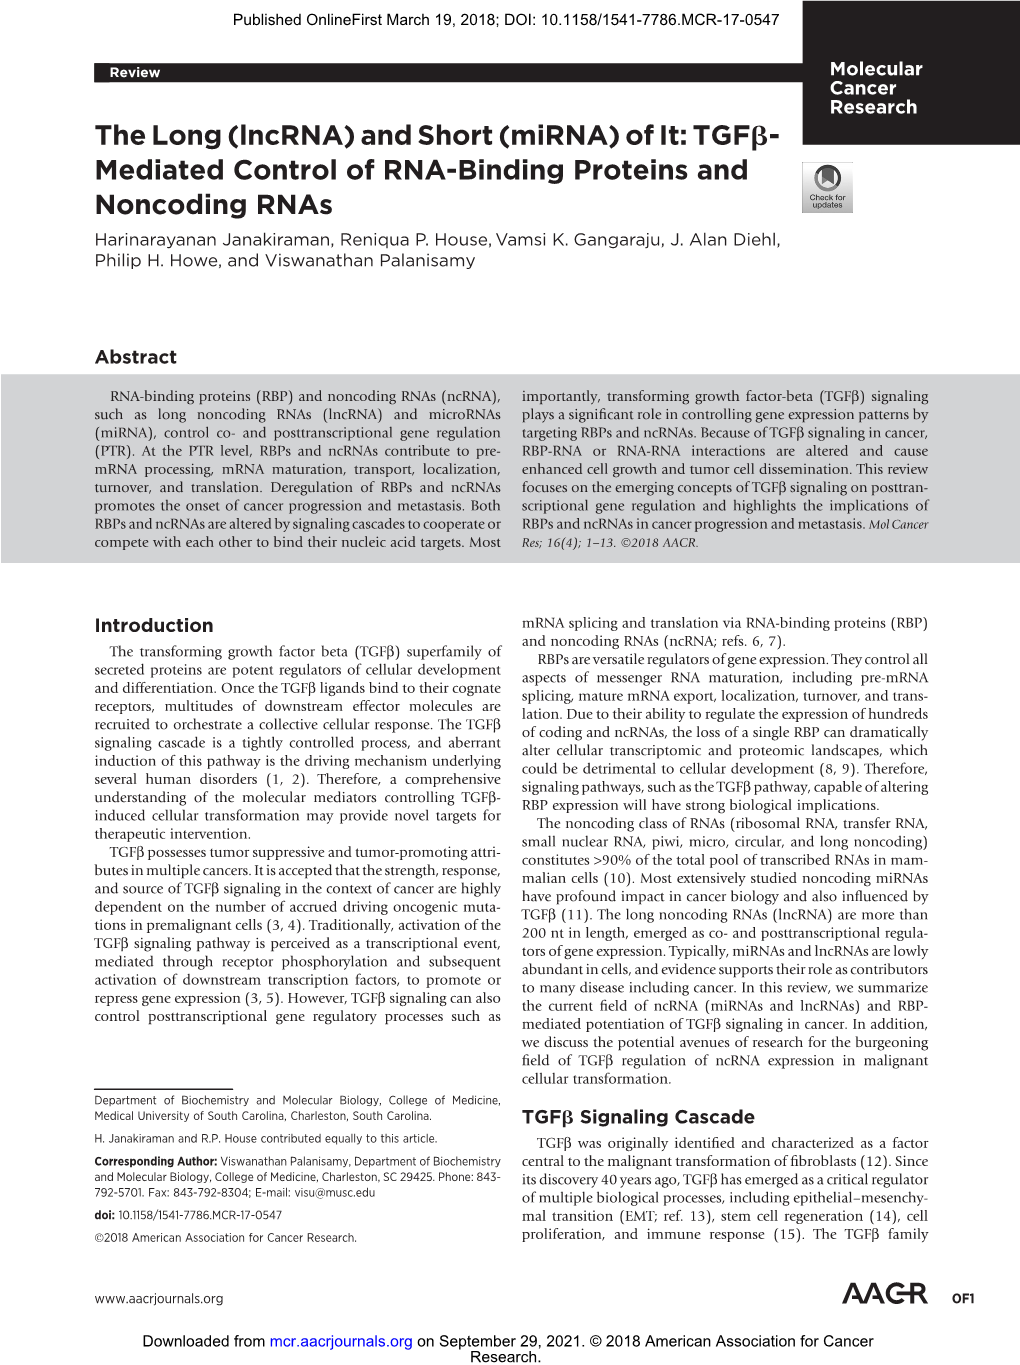 Tgfb- Mediated Control of RNA-Binding Proteins and Noncoding Rnas Harinarayanan Janakiraman, Reniqua P